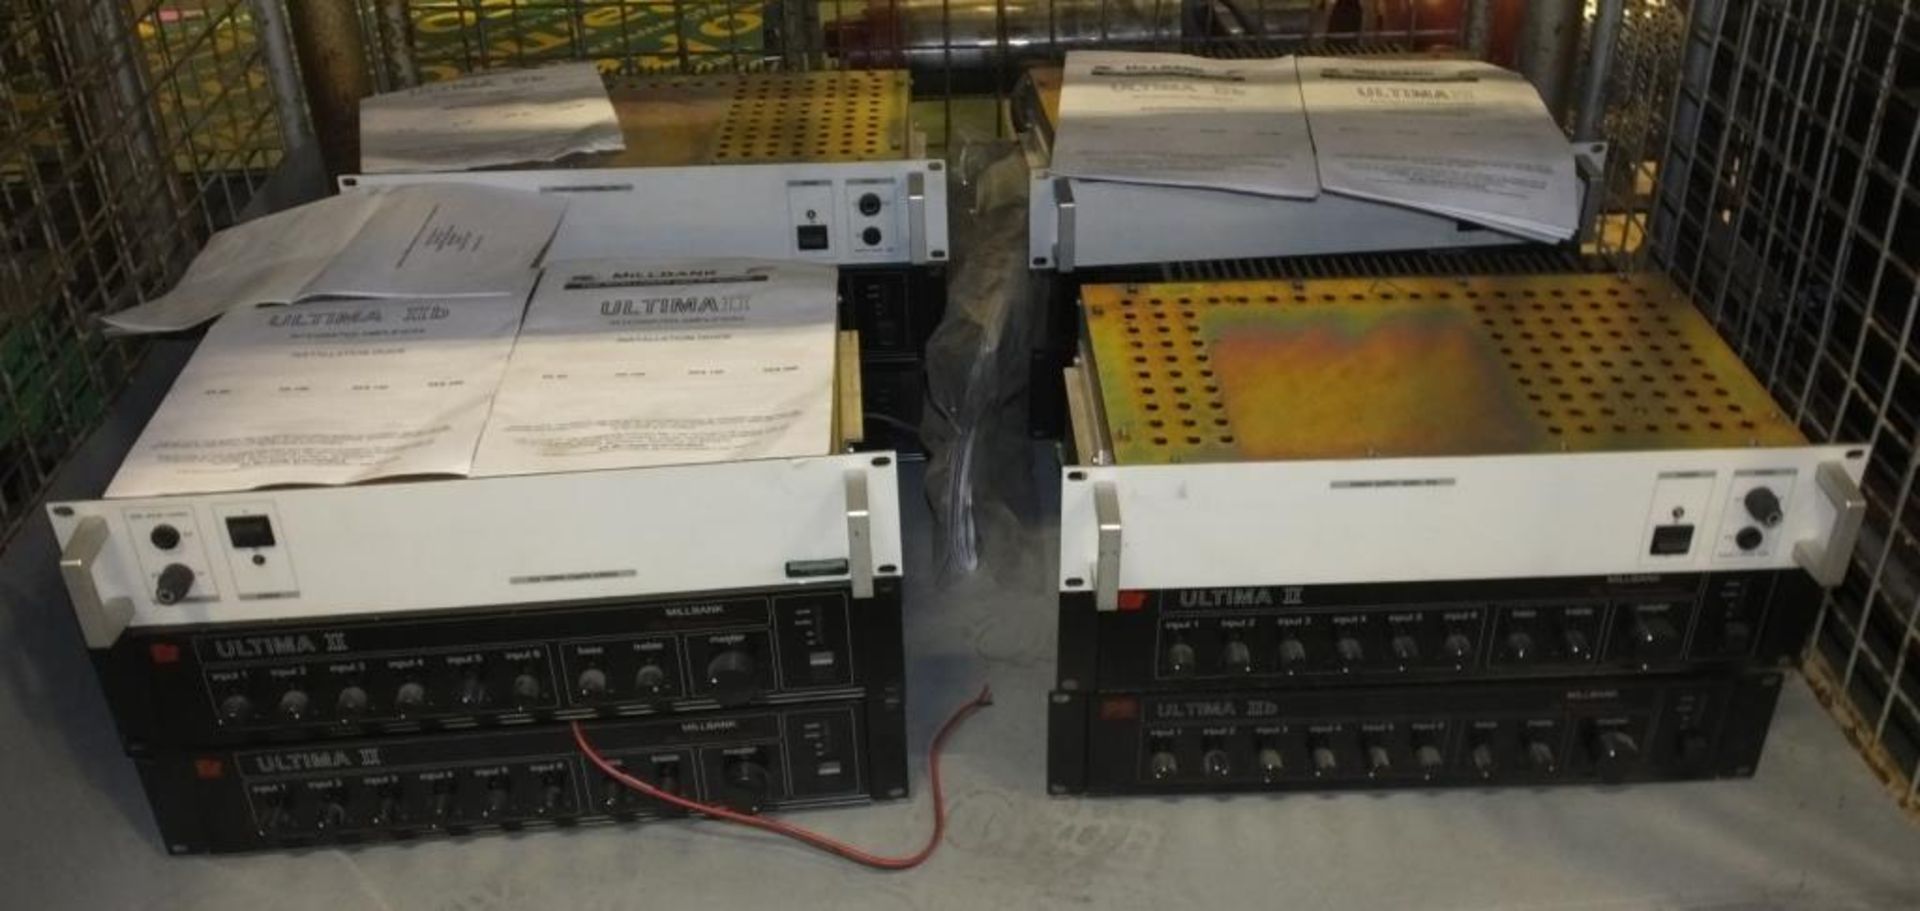 8x Ultima amplifiers, 4x Power panels